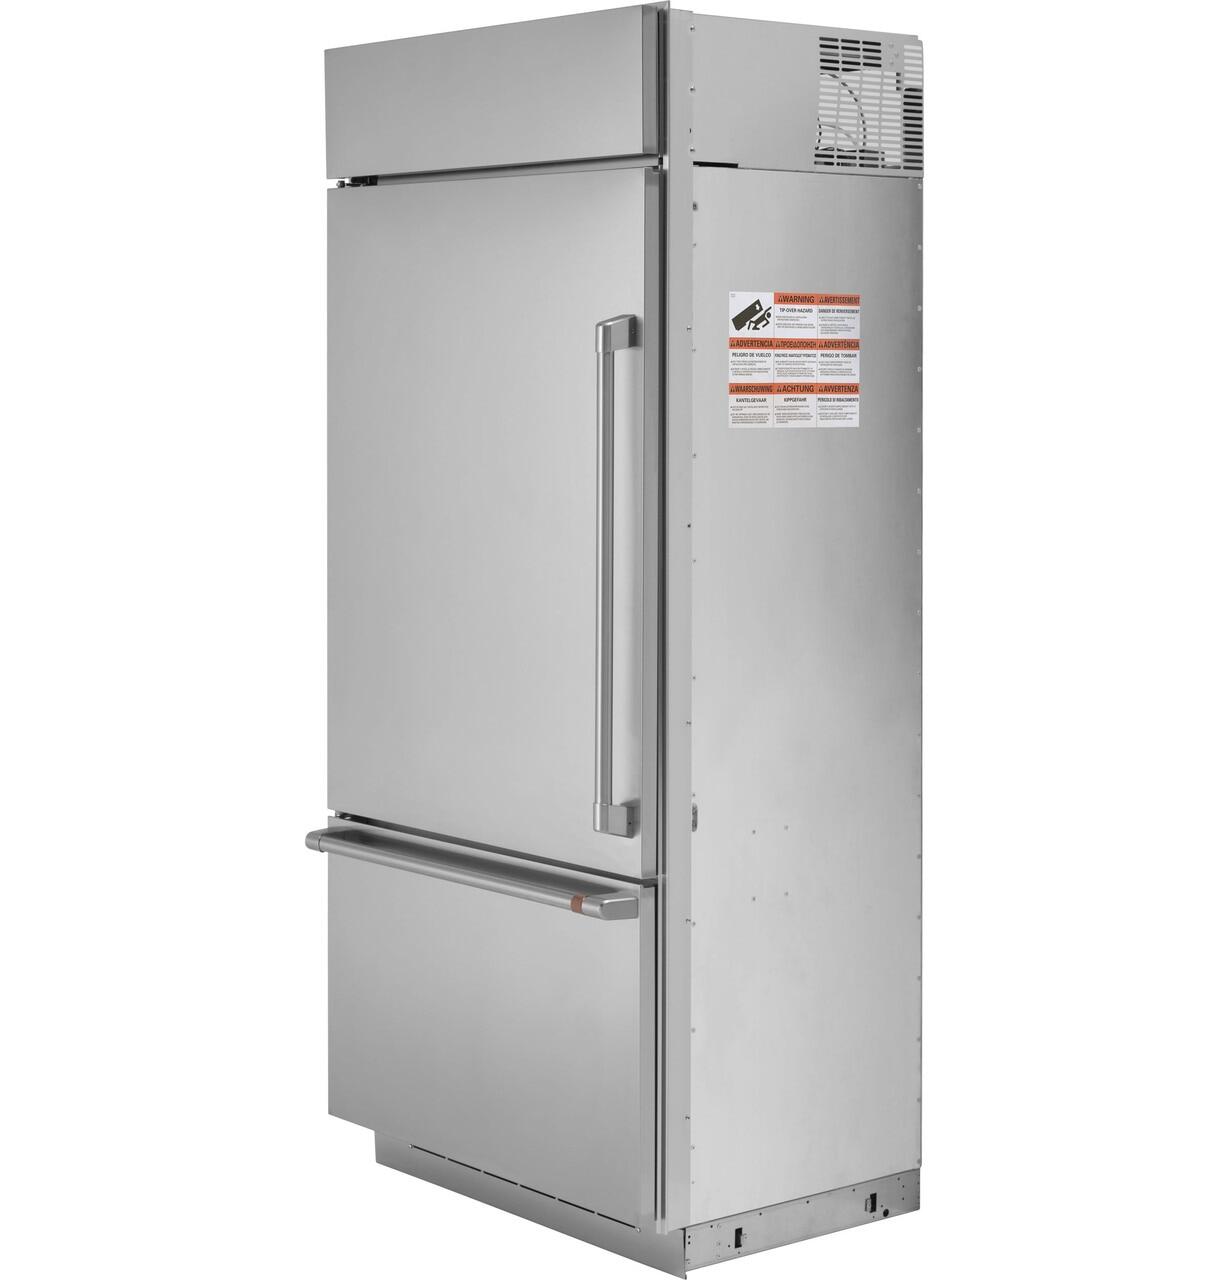 Cafe CDB36LP2PS1 Café™ 21.3 Cu. Ft. Built-In Bottom-Freezer Refrigerator